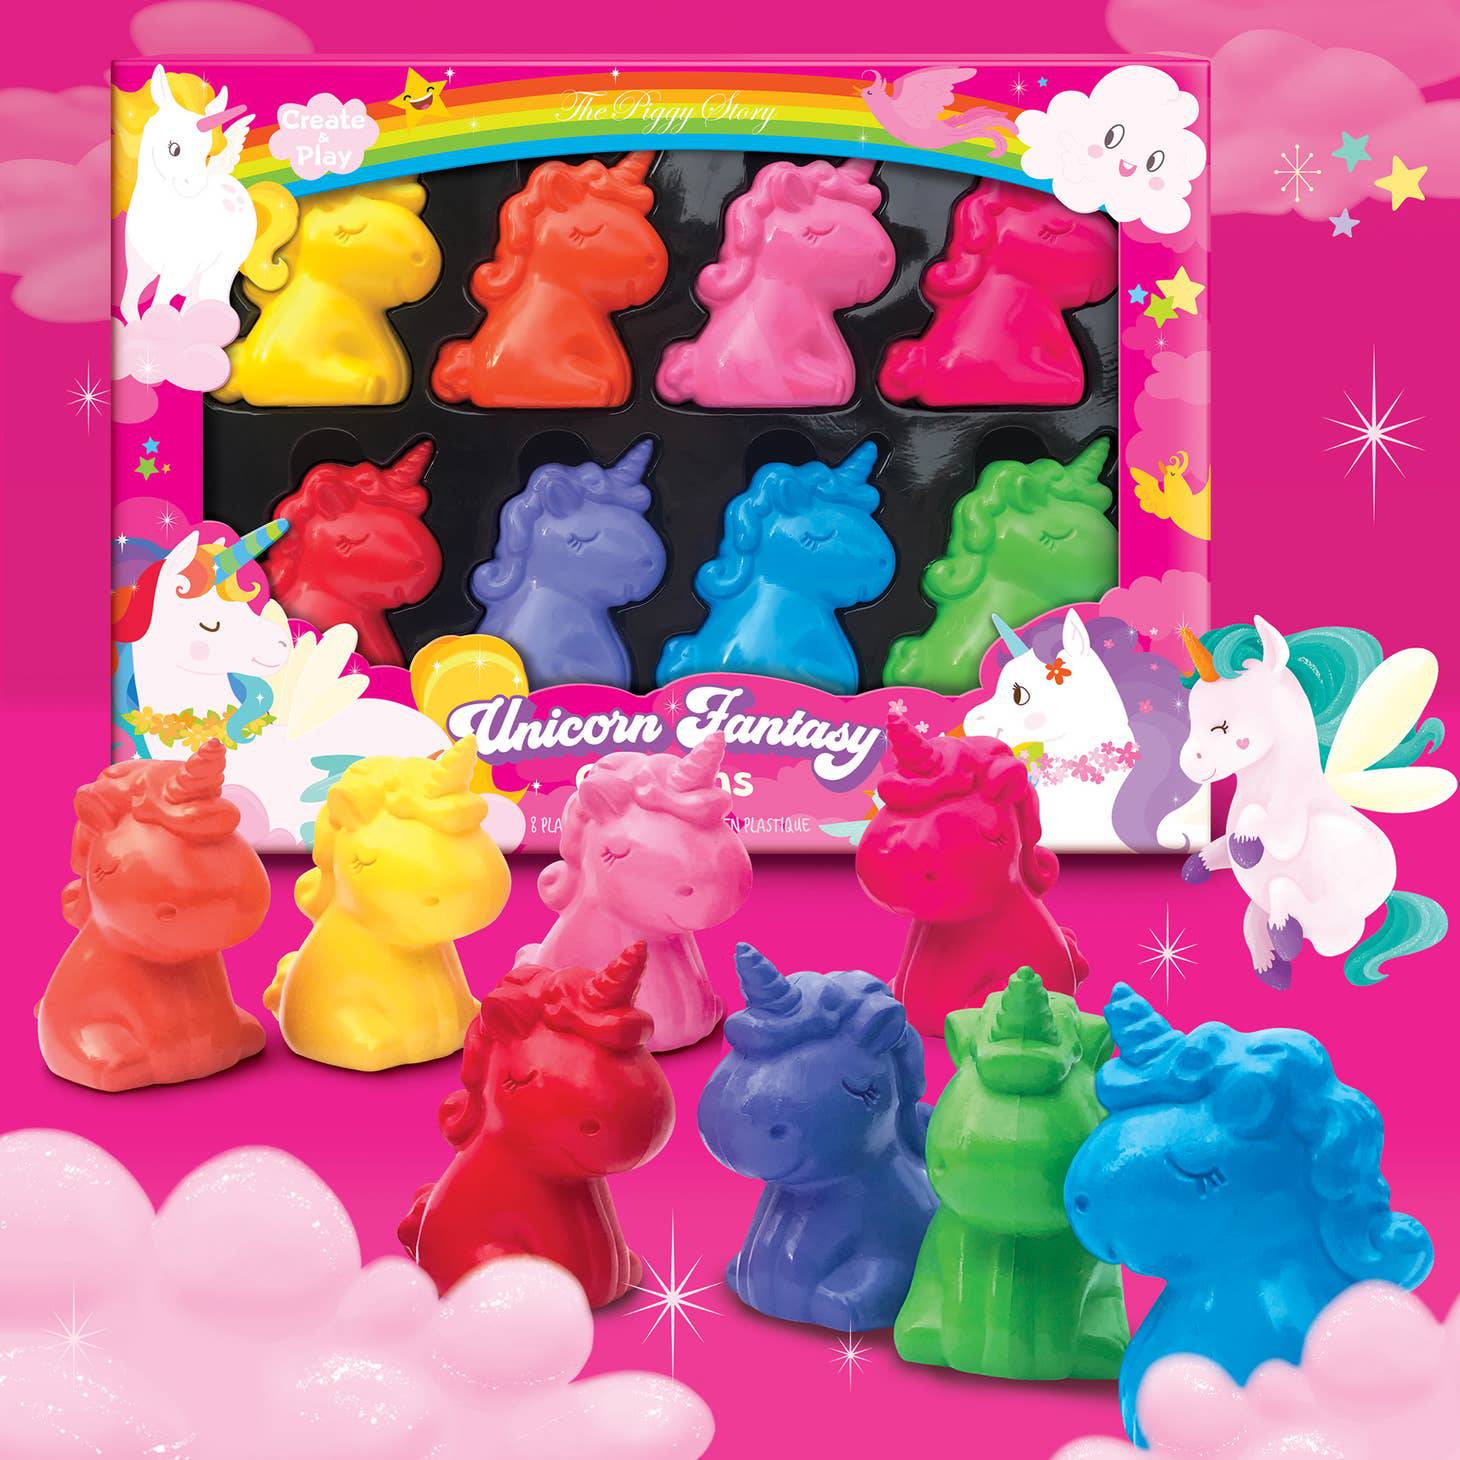 Unicorn Fantasy Crayons of Fun - Twinkle Twinkle Little One